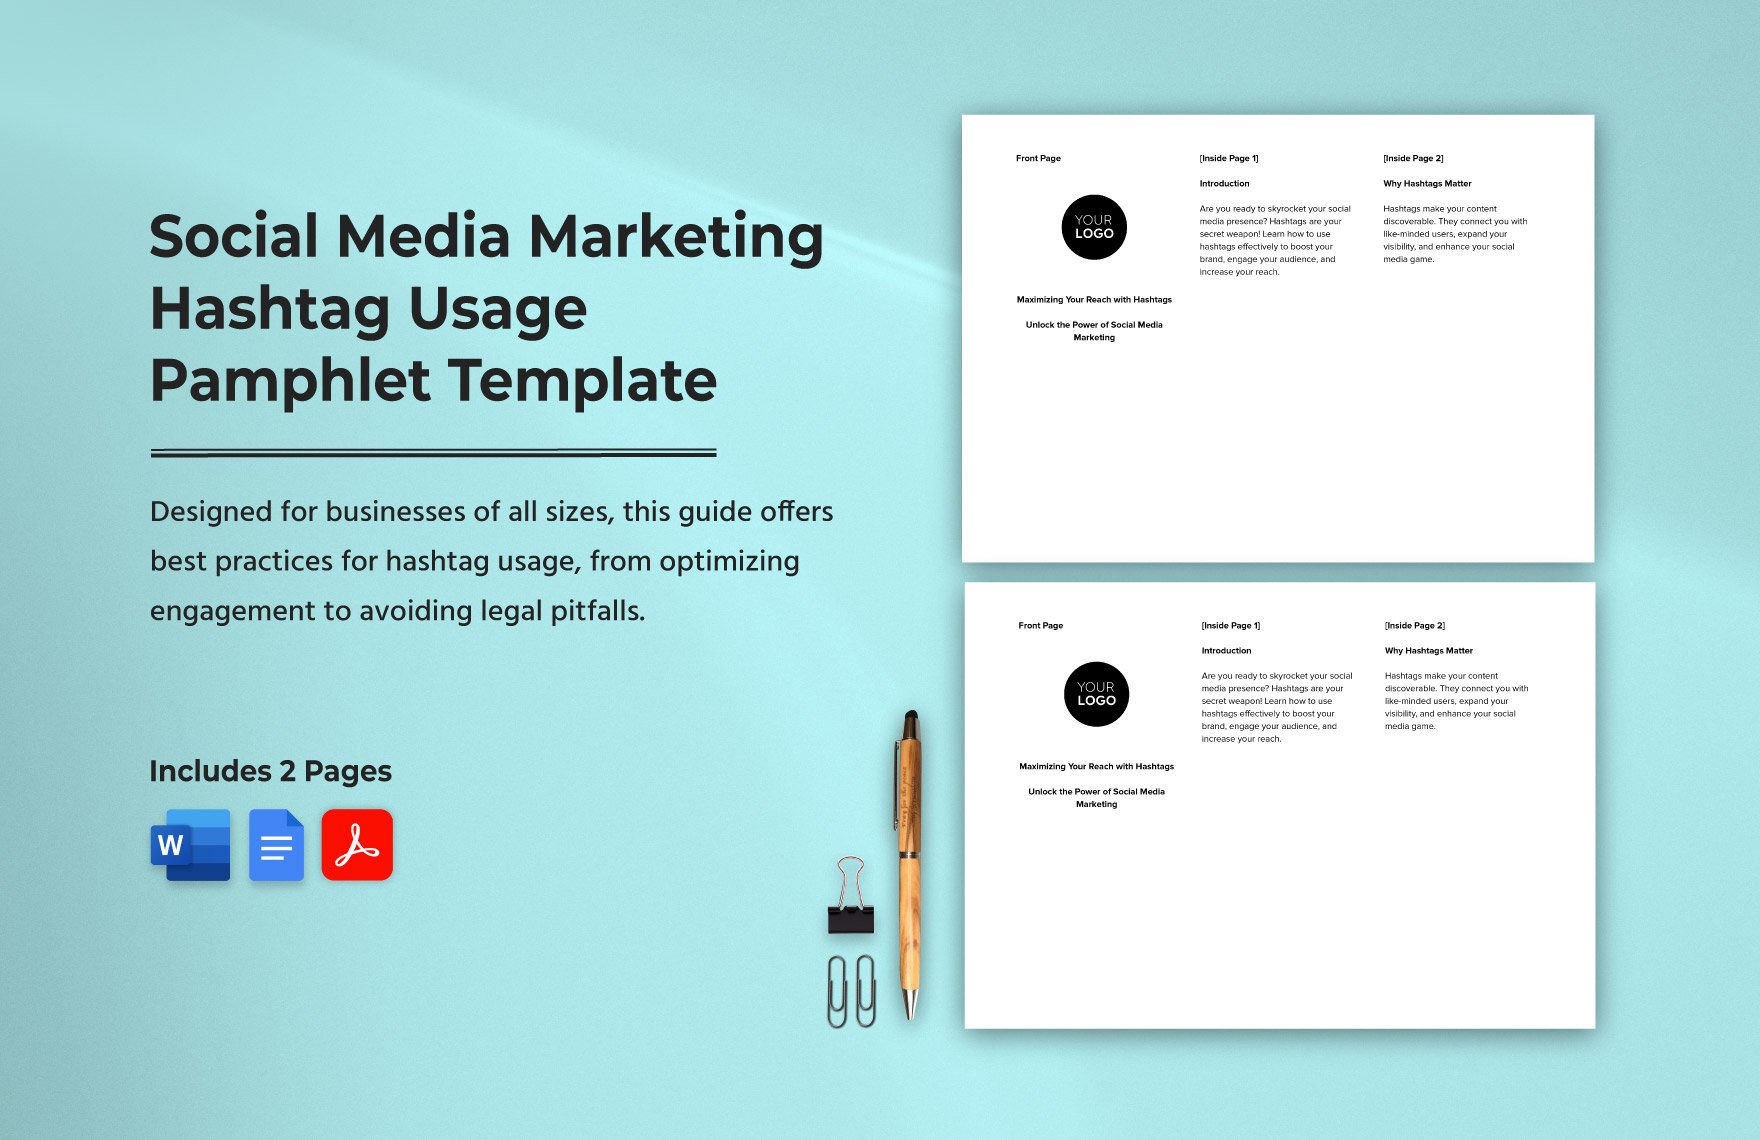 Social Media Marketing Hashtag Usage Pamphlet Template